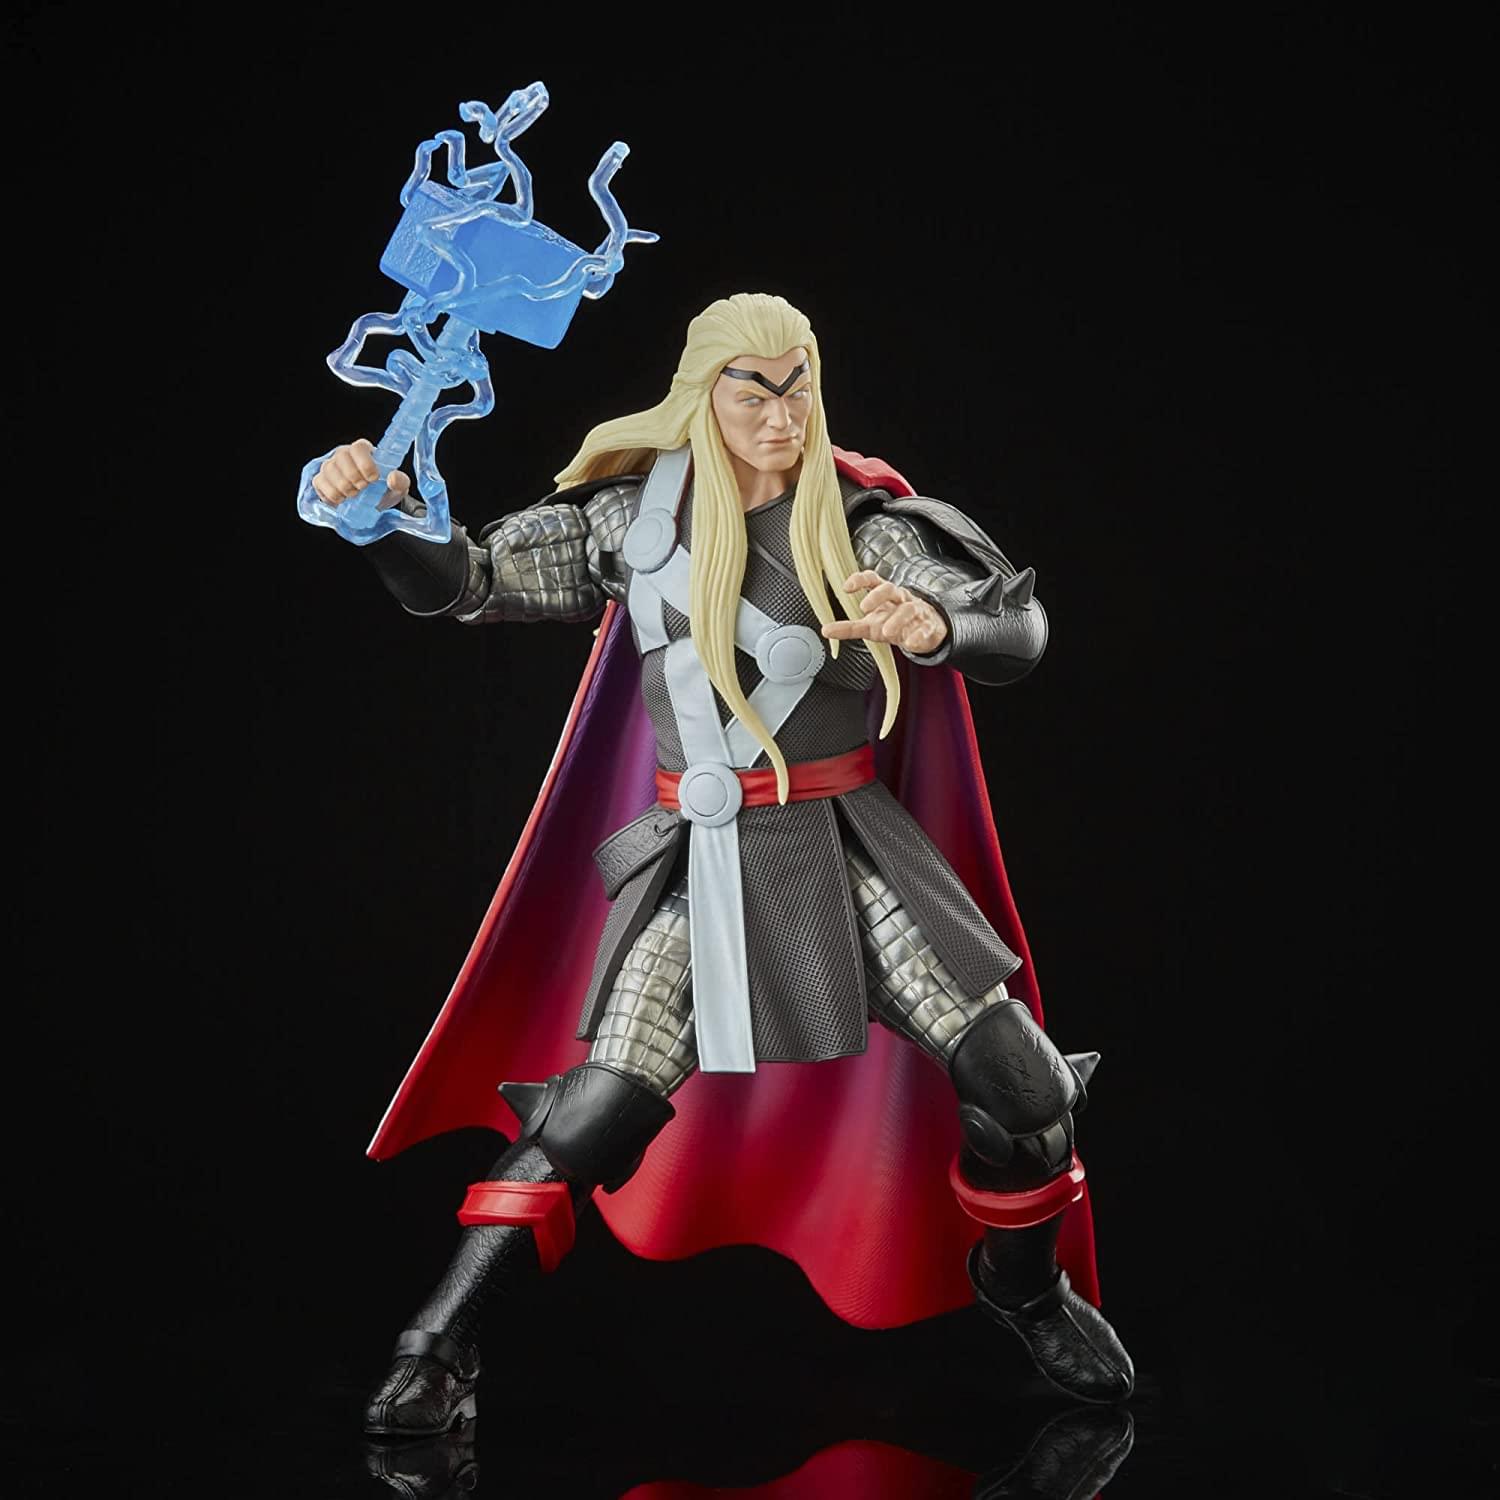 Marvel Legends 6 Inch Action Figure | Thor